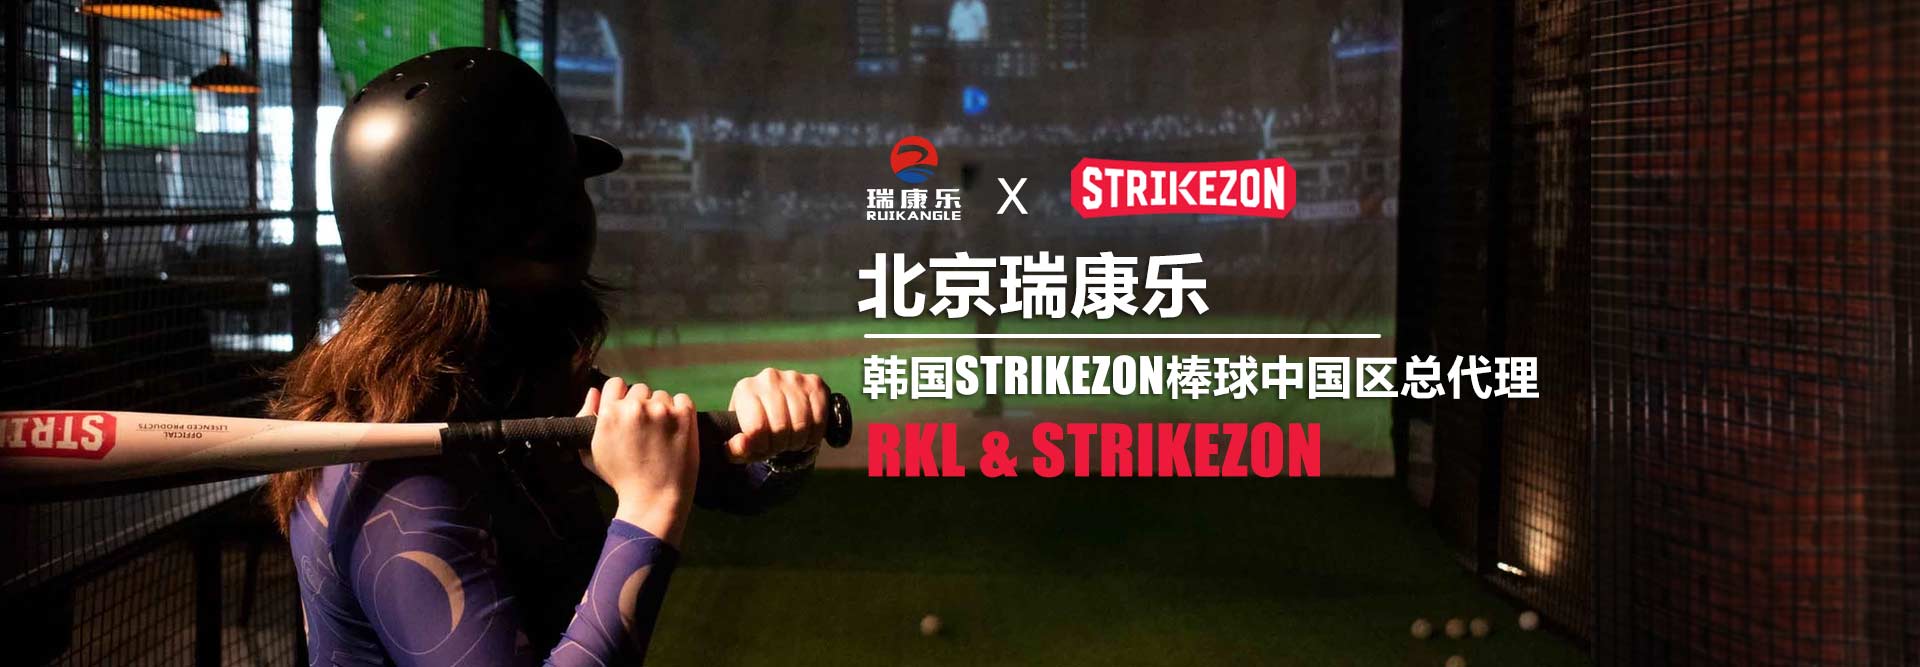 strikezon